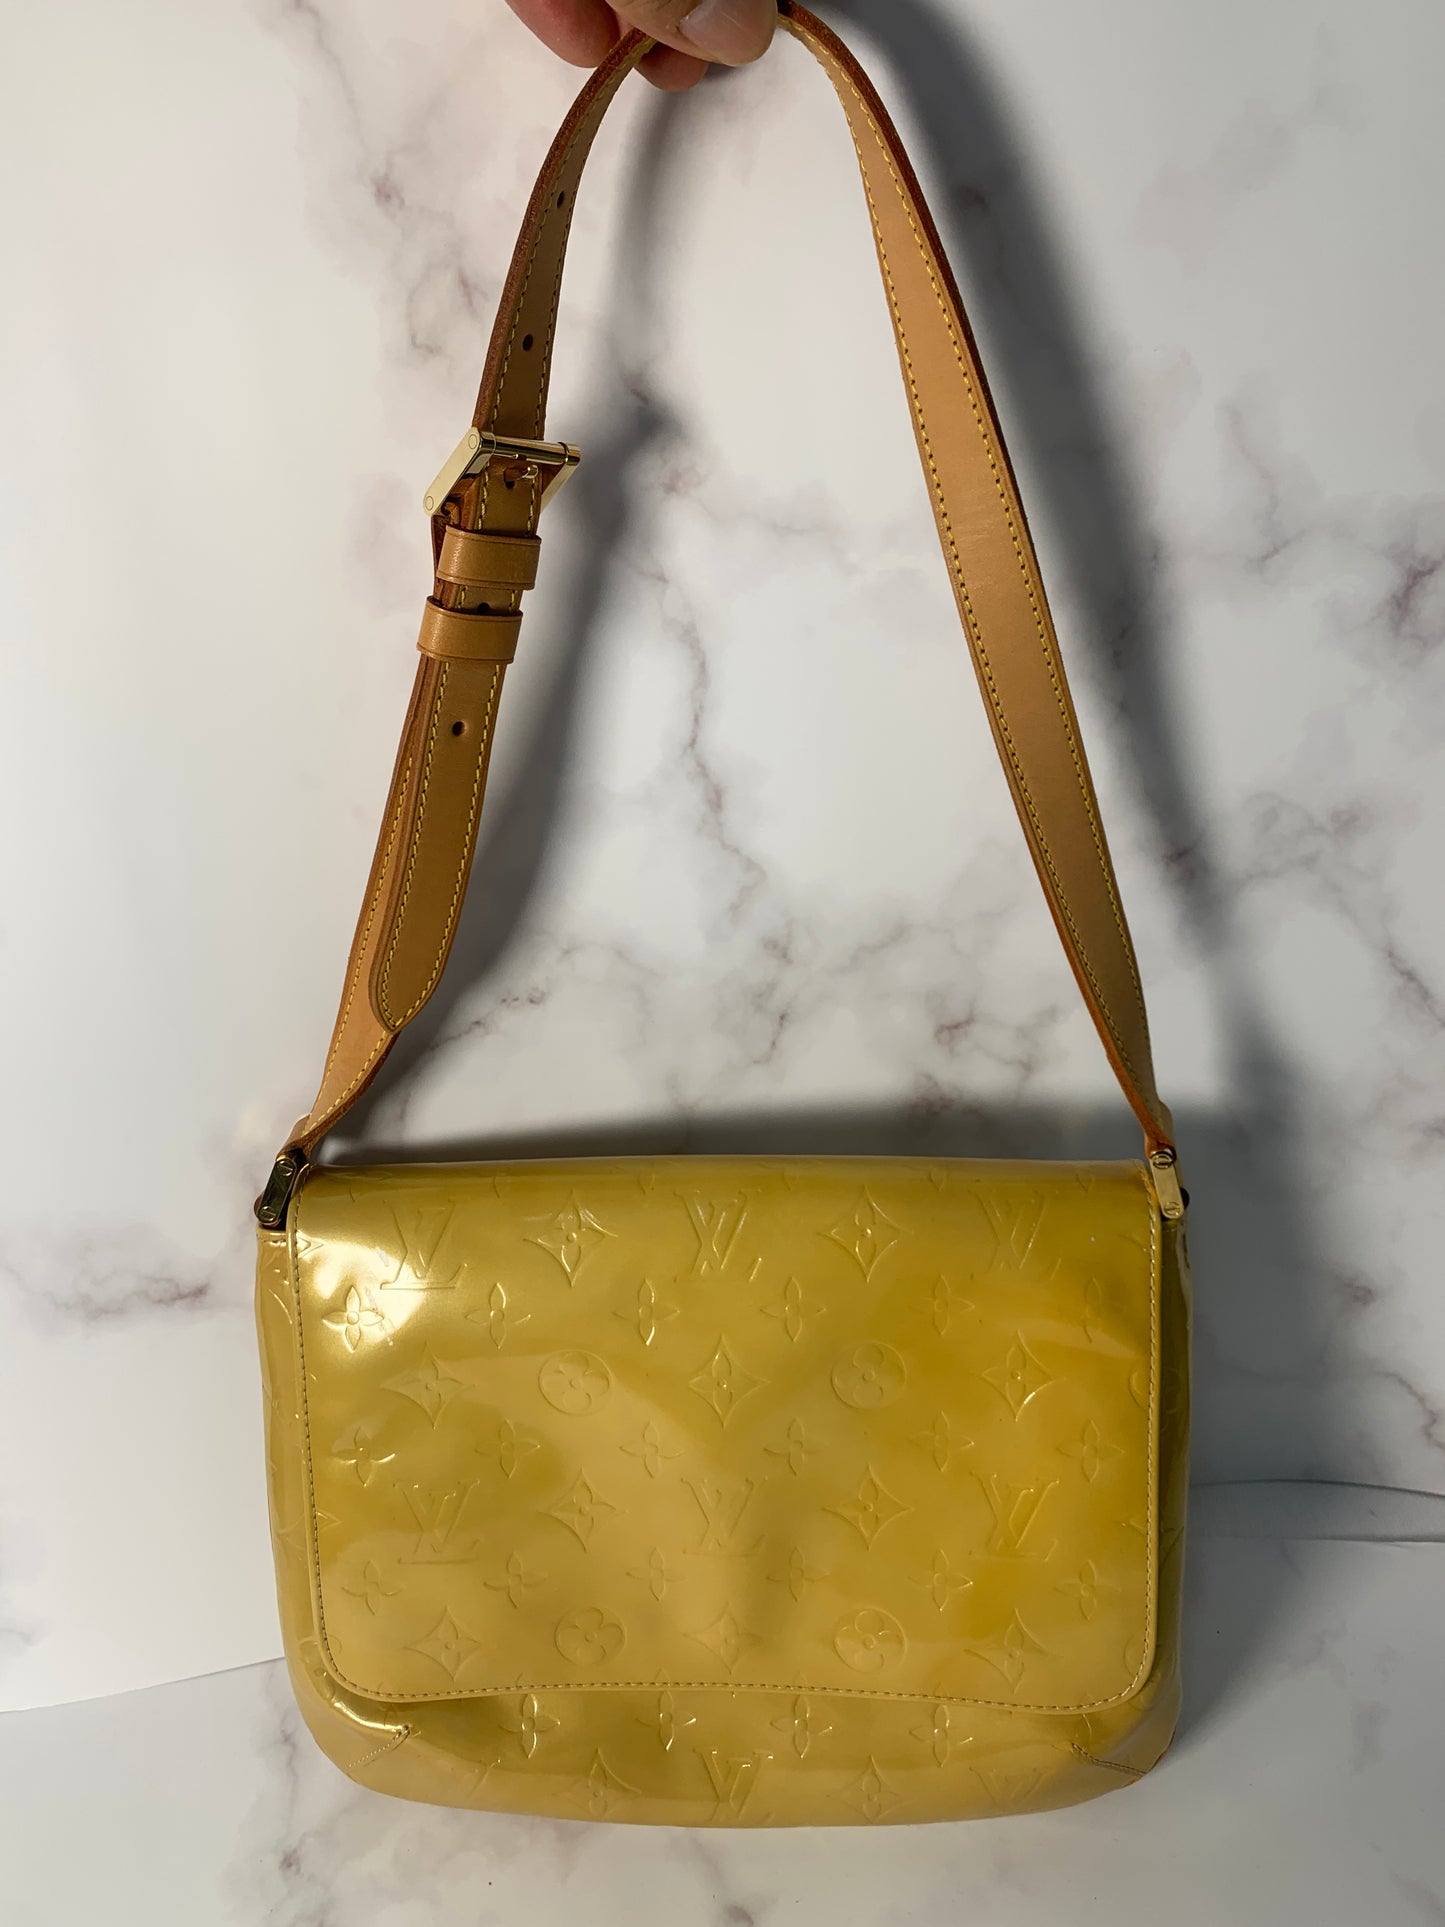 Louis vuitton handbag beige Monogram LV bag CA0051